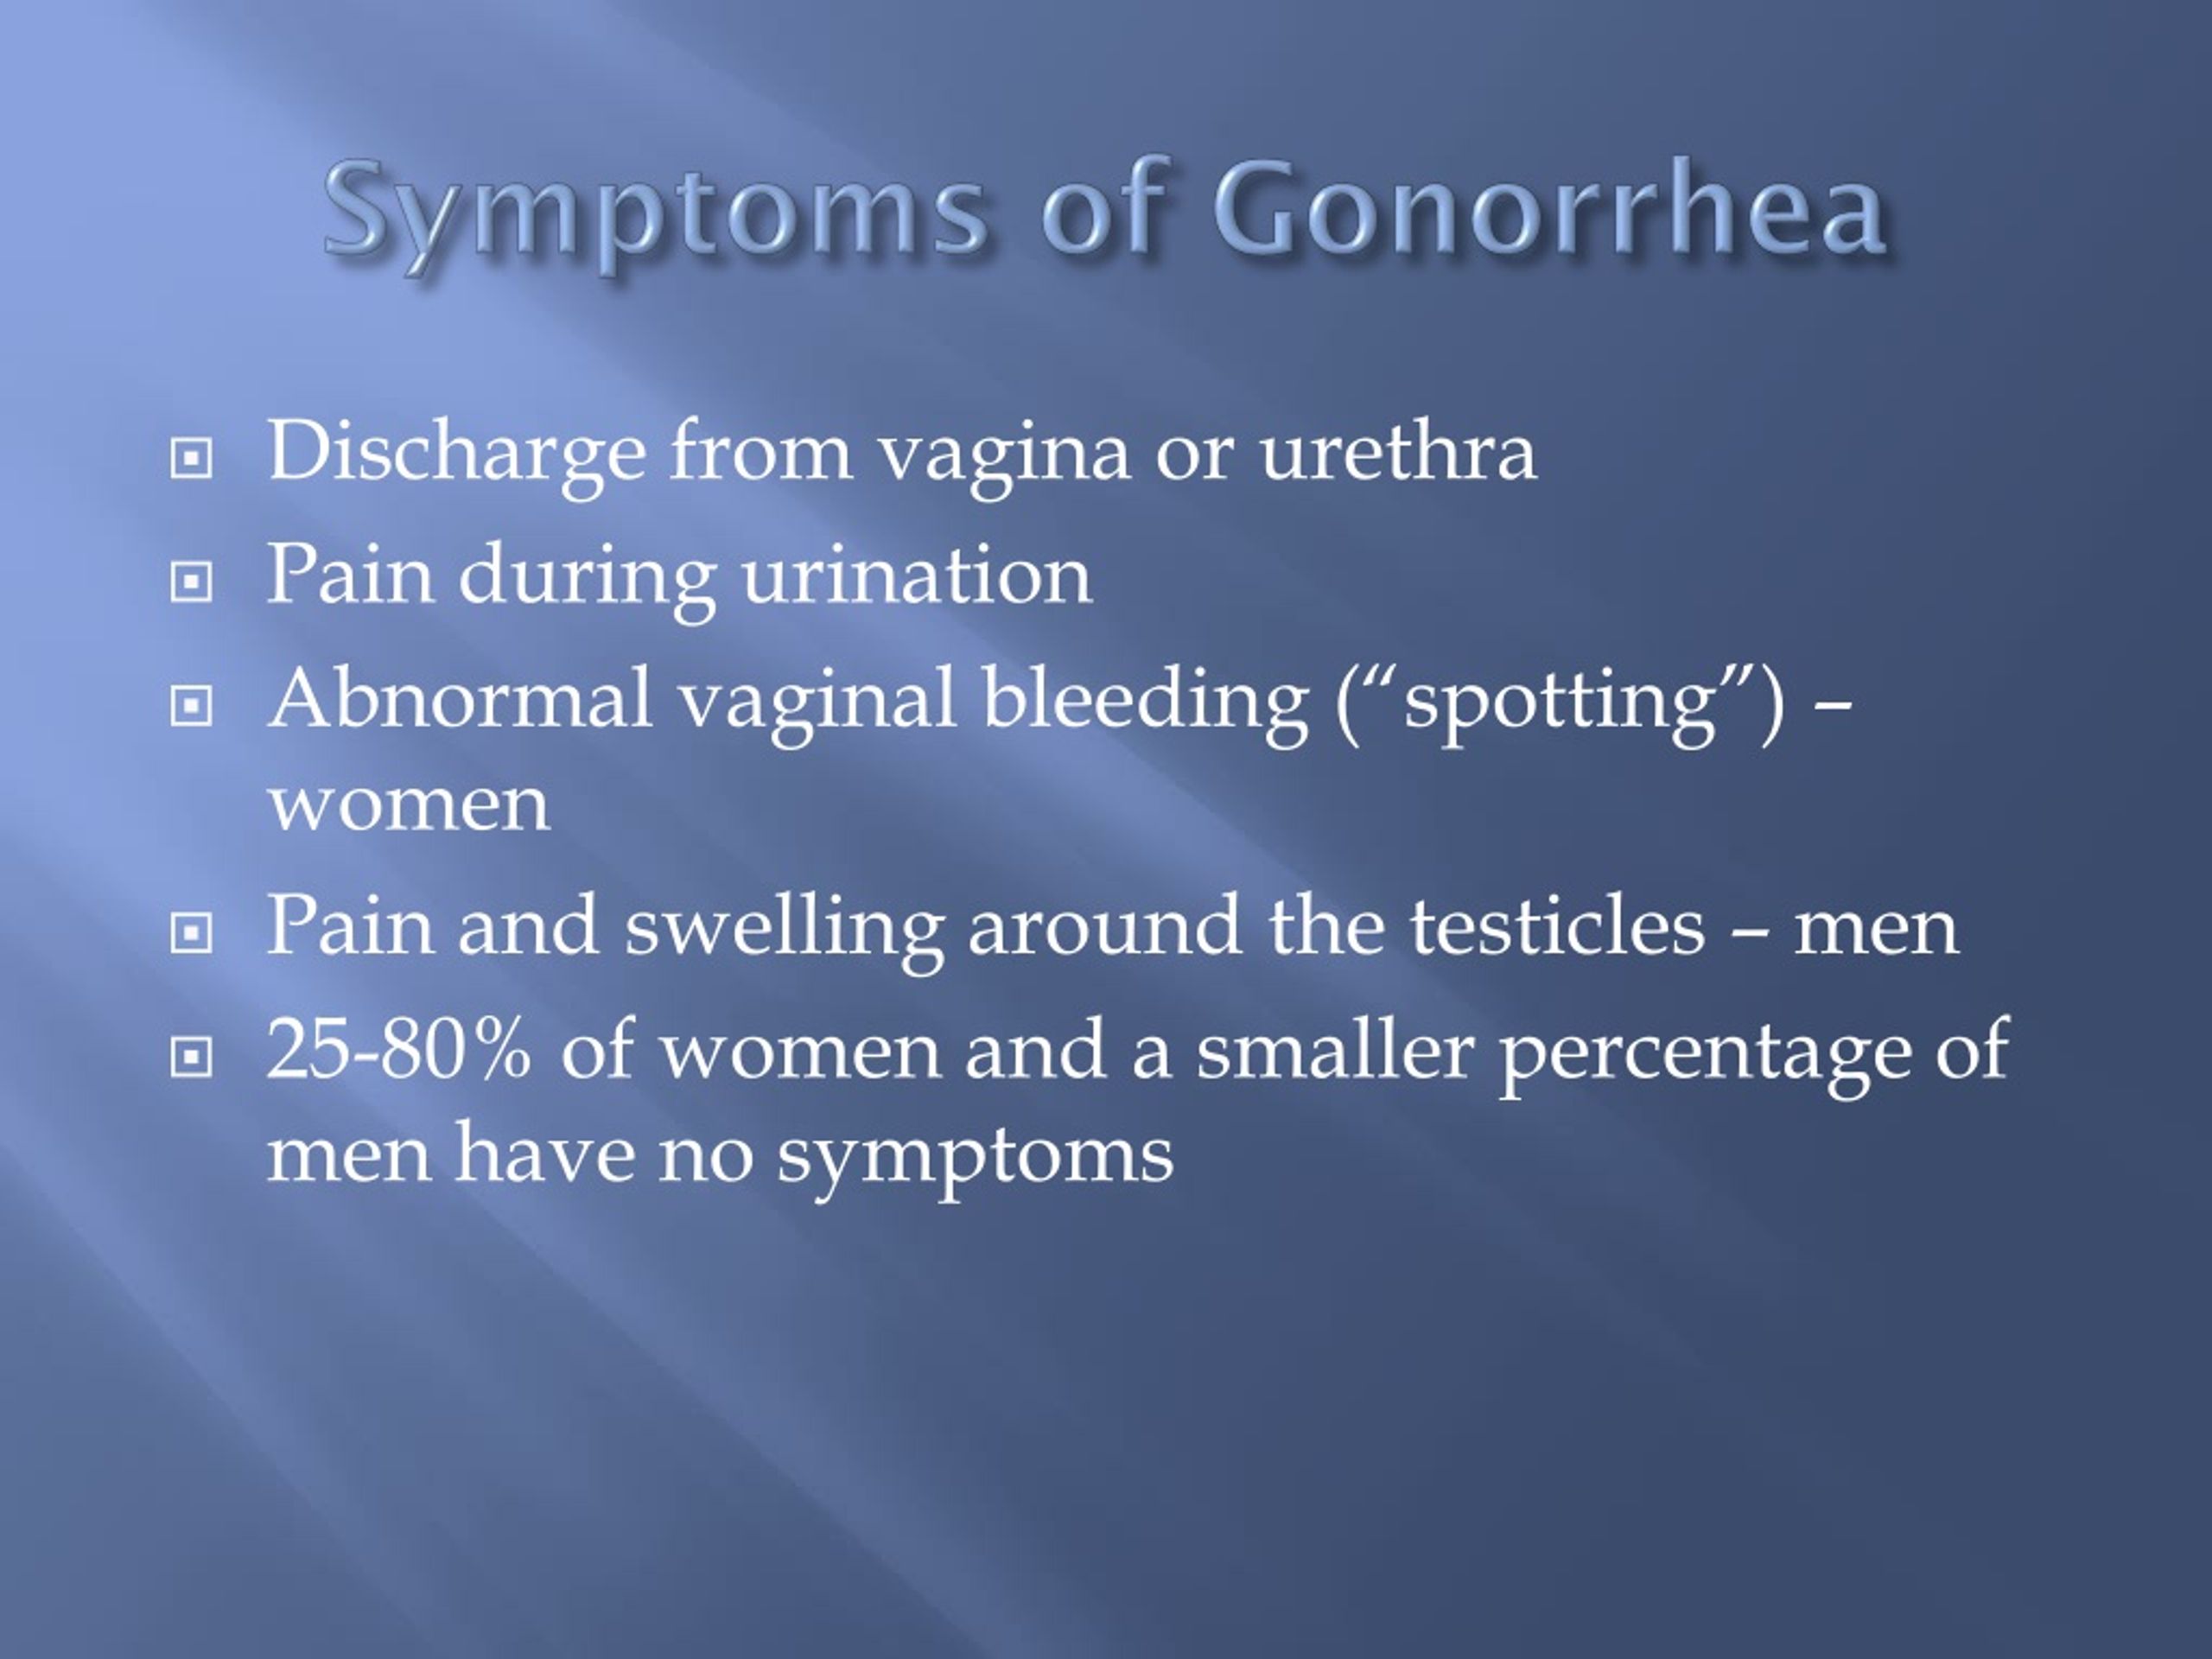 gonorrhea symptoms in men photos